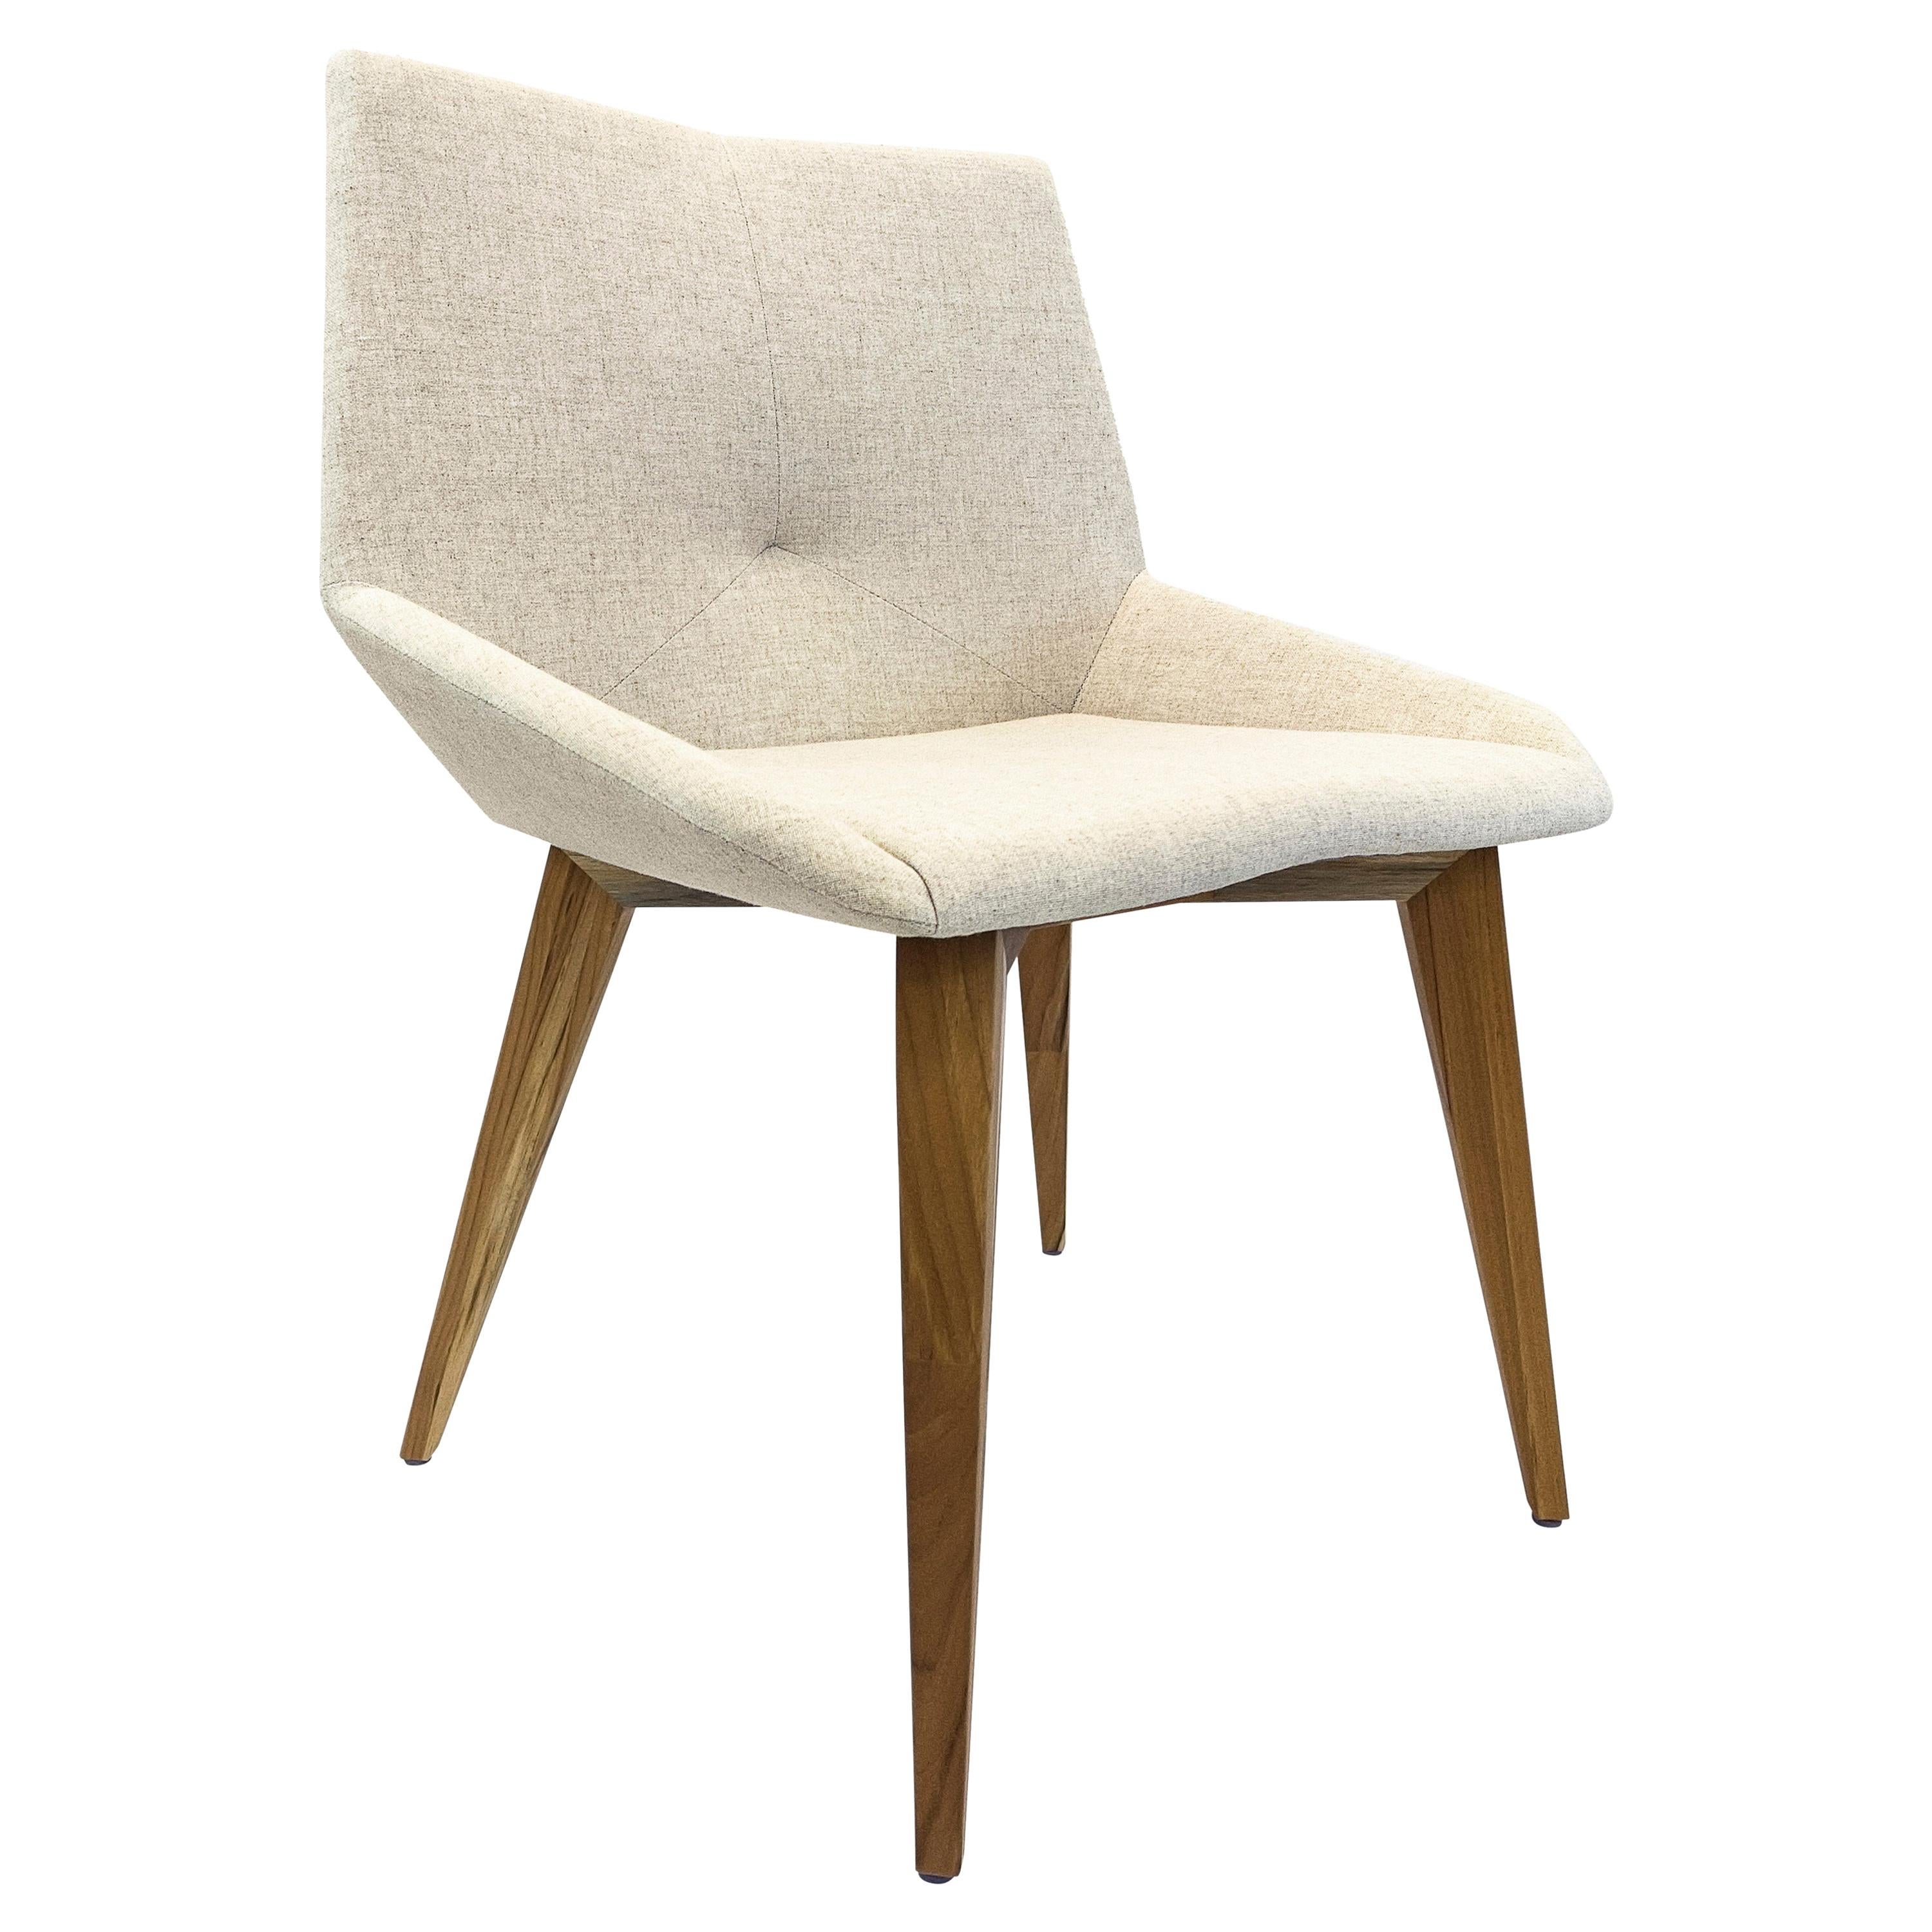 Geometric Cubi Dining Chair in Teak Wood Finish with Oatmeal Fabric Seat